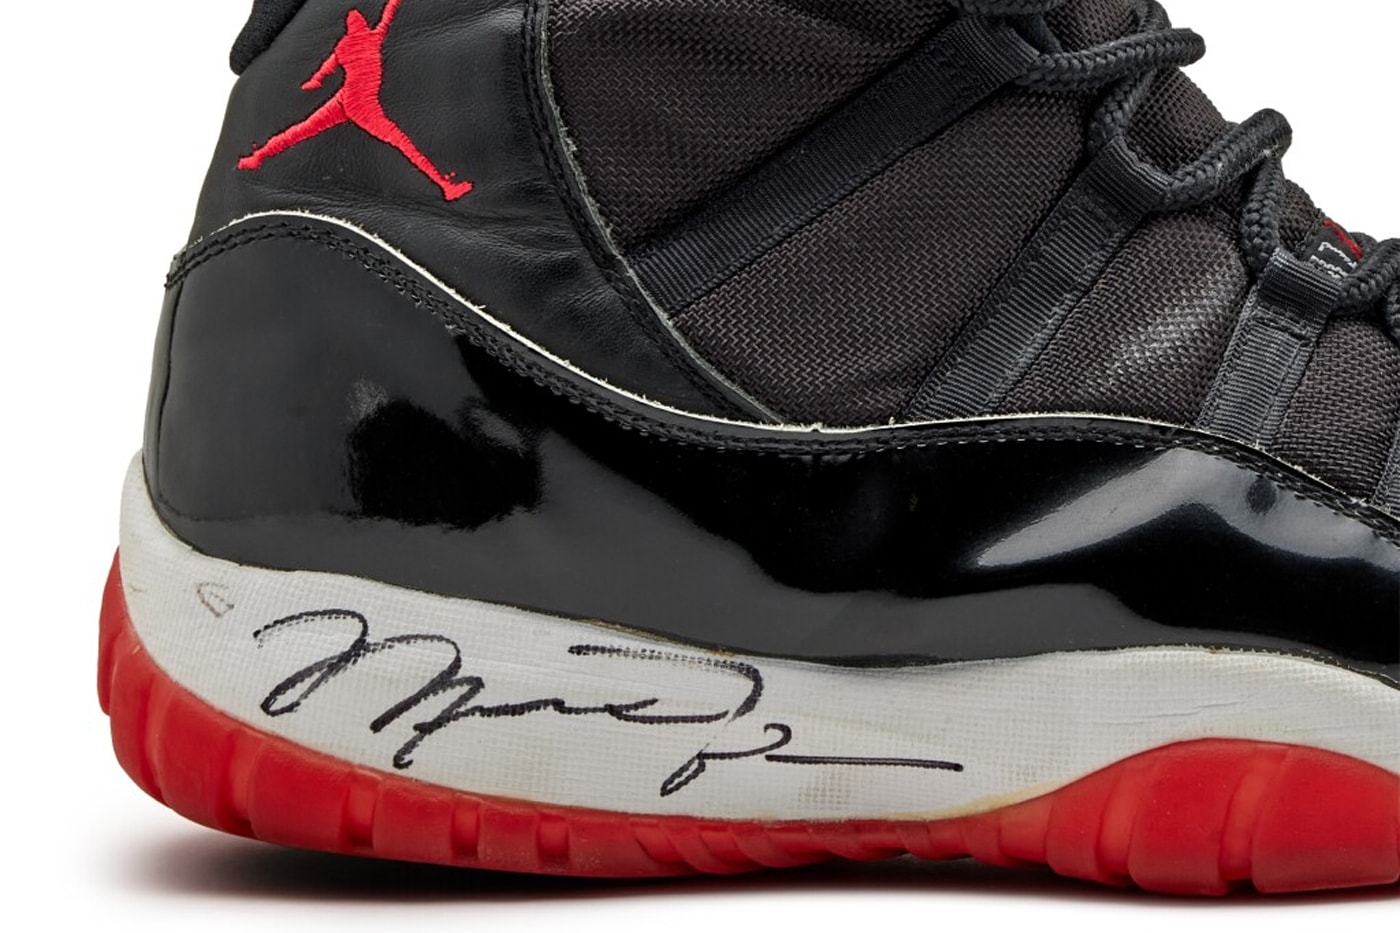 Michael Jordan 1996 NBA Finals Game Worn and Signed Air Jordan 11s Auction for 482 600 USD sothebys